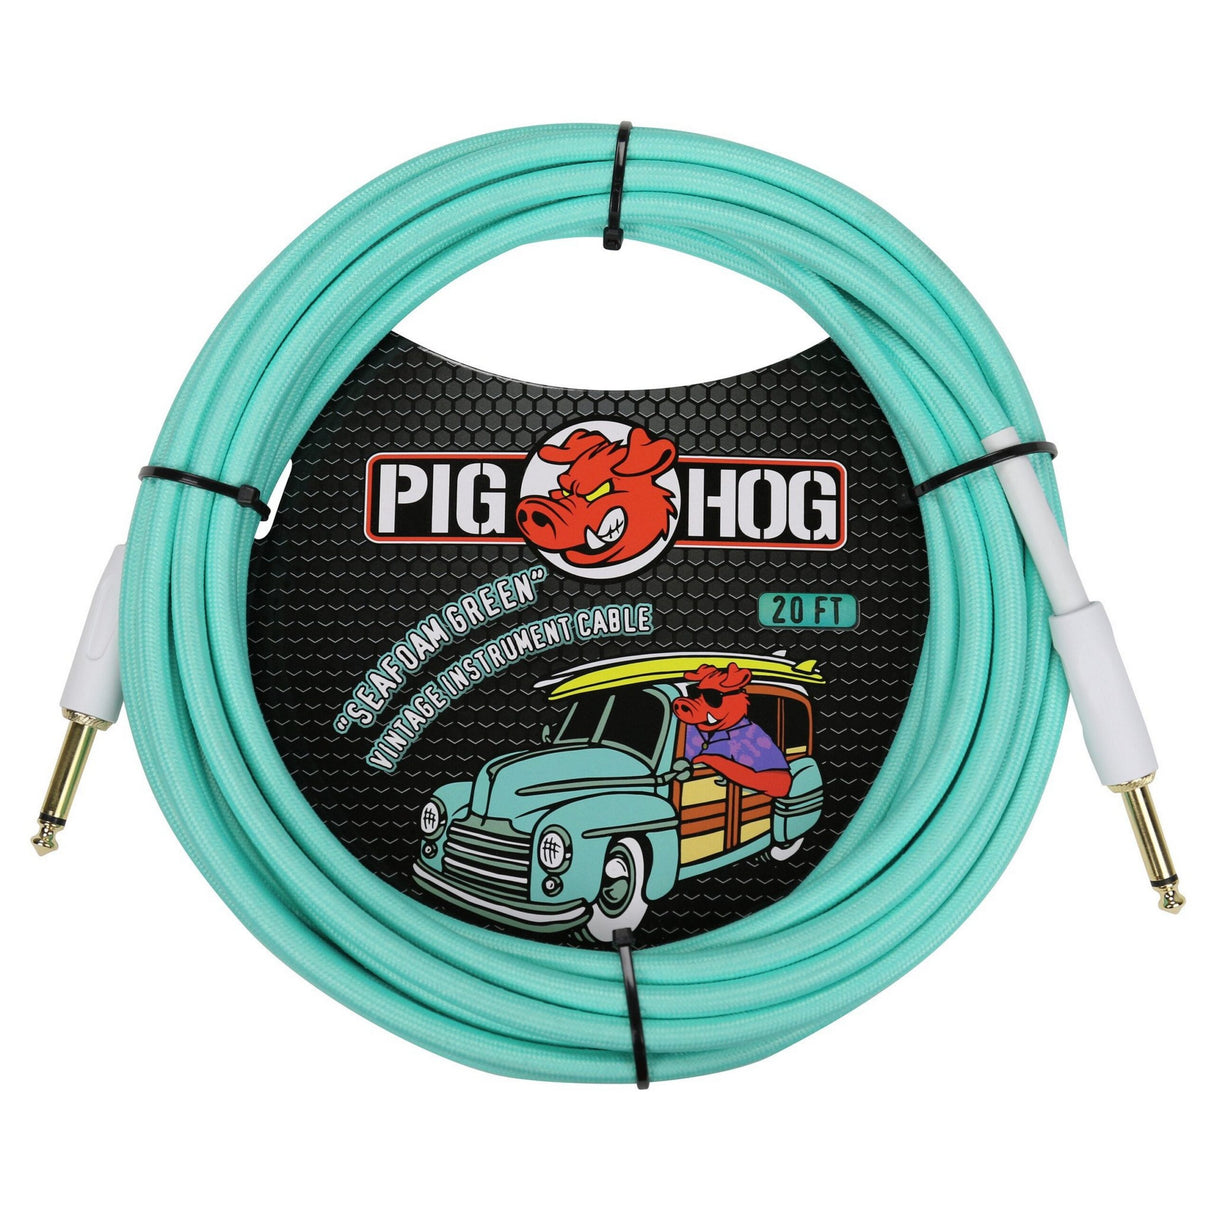 Pig Hog PCH20SG "Seafoam Green" Instrument Cable, 20ft.